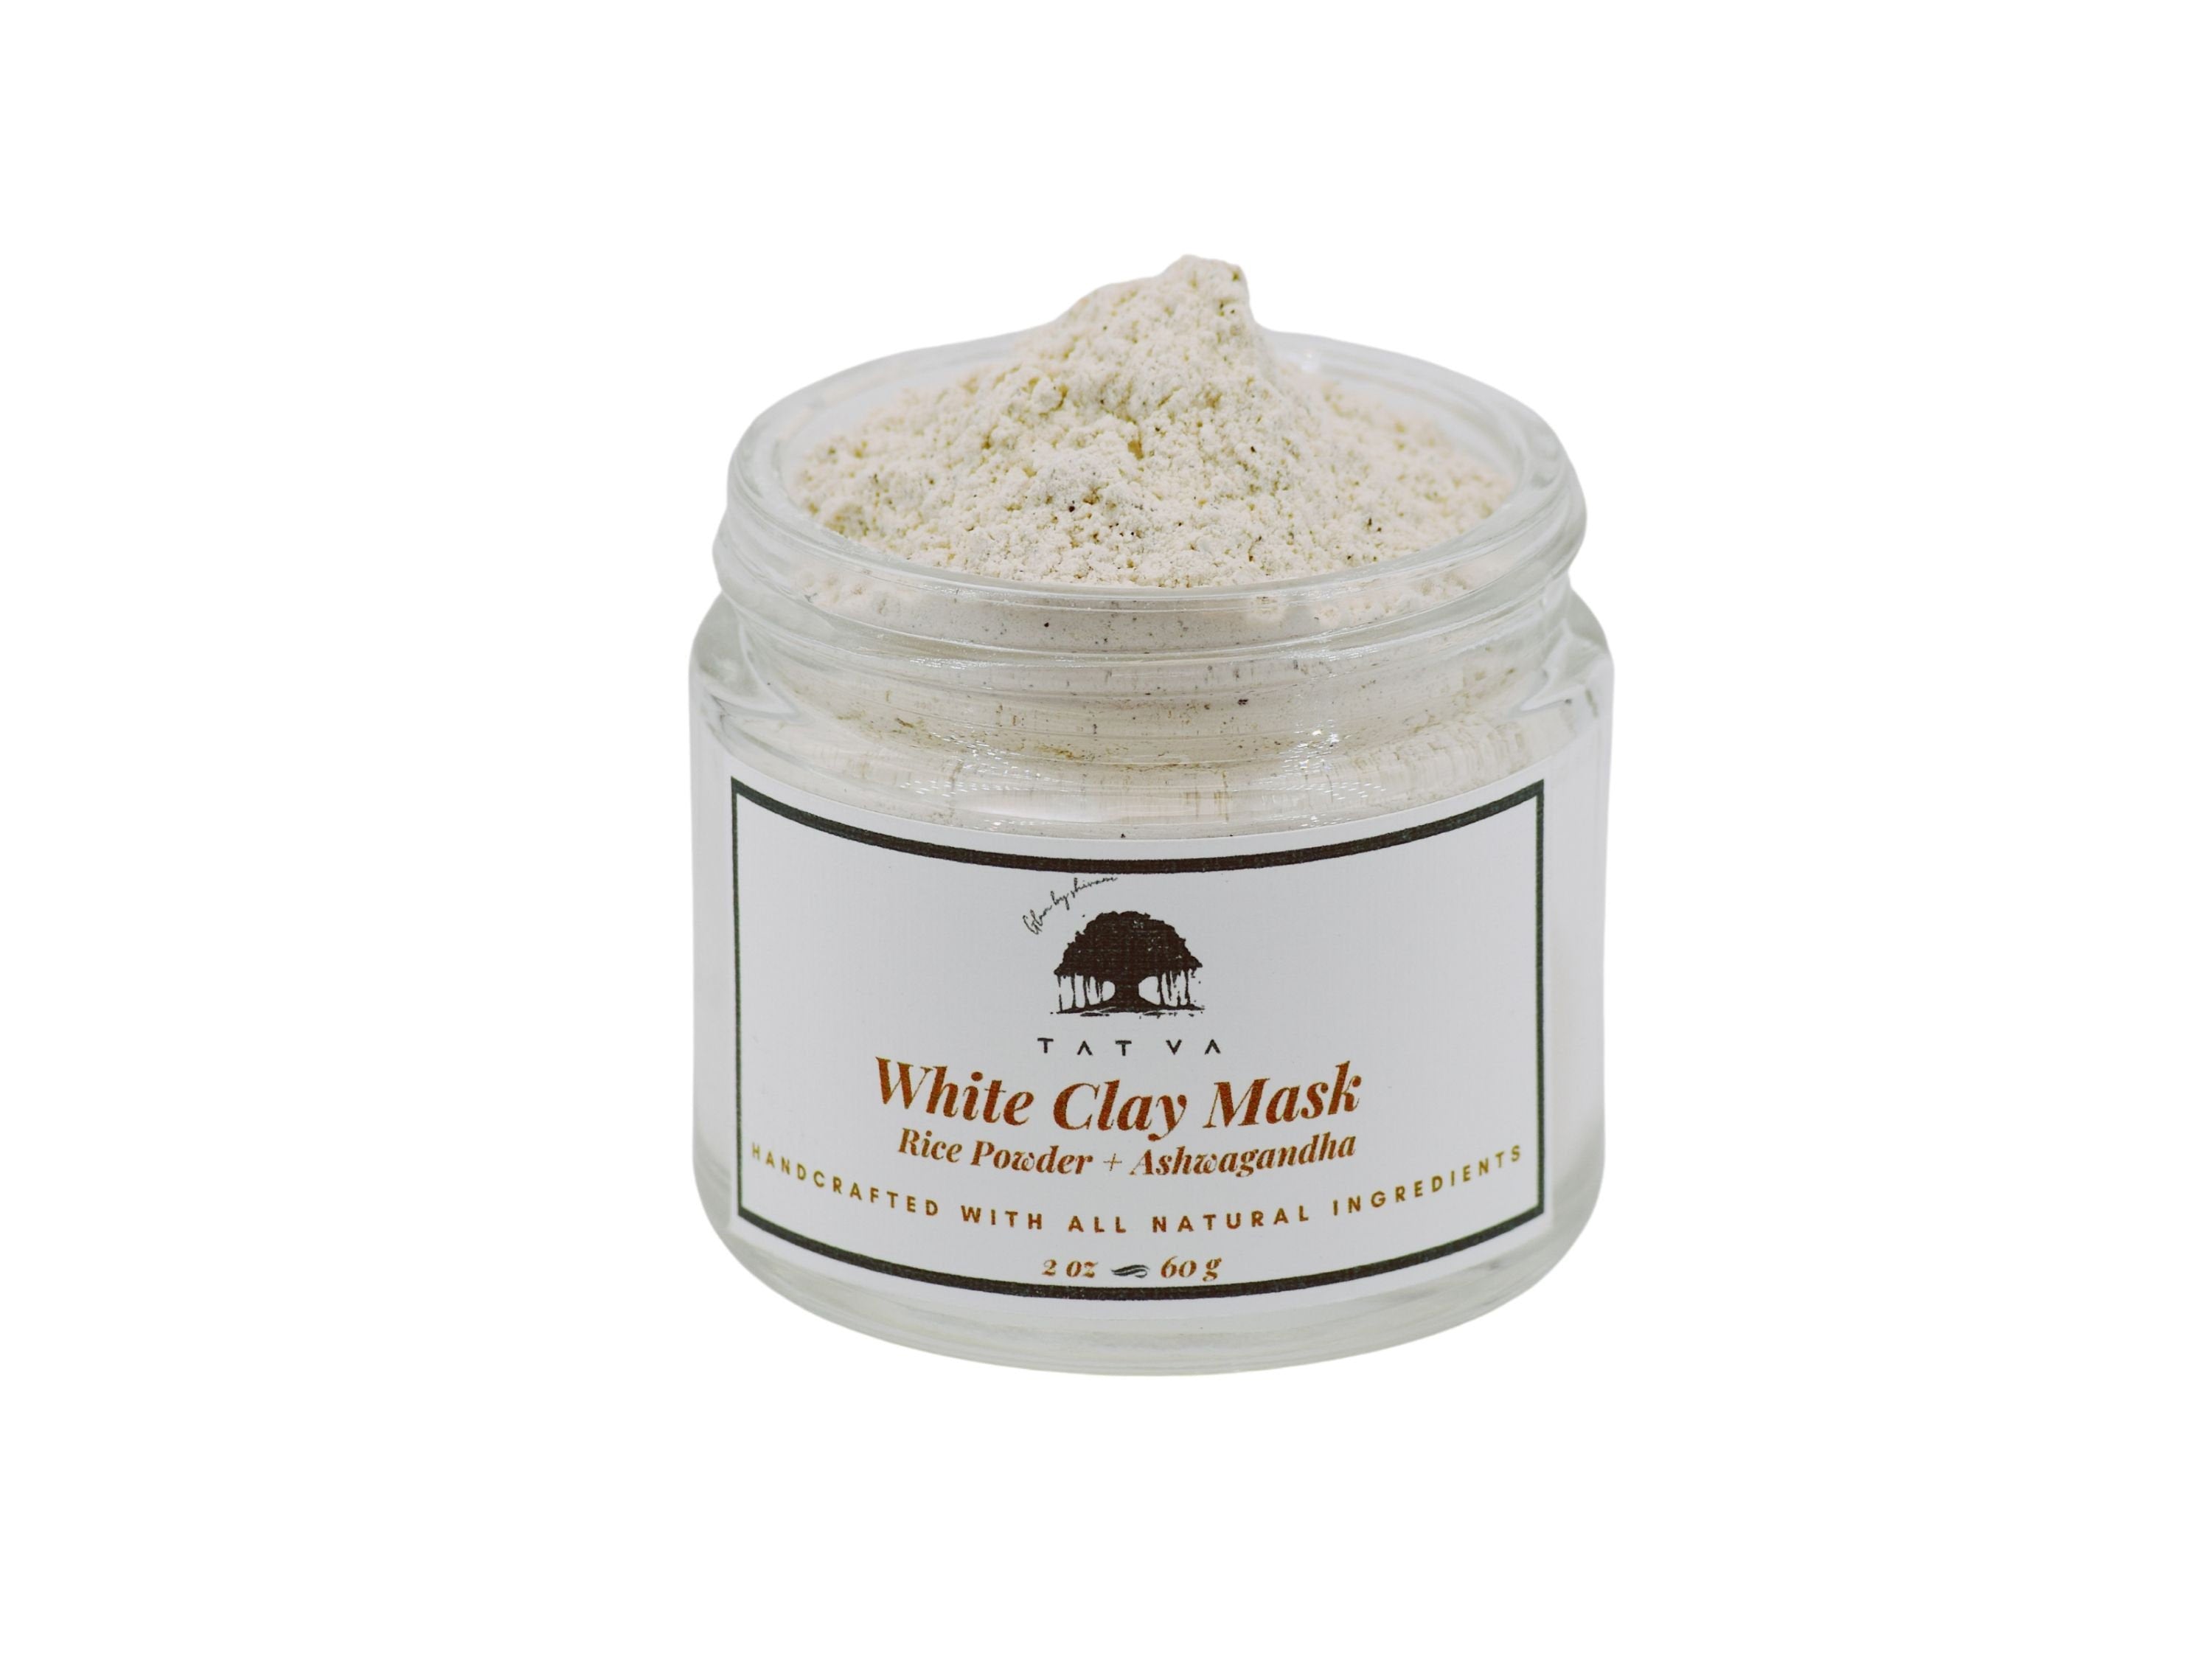 The White Clay Mask - Brightening, Detoxifying